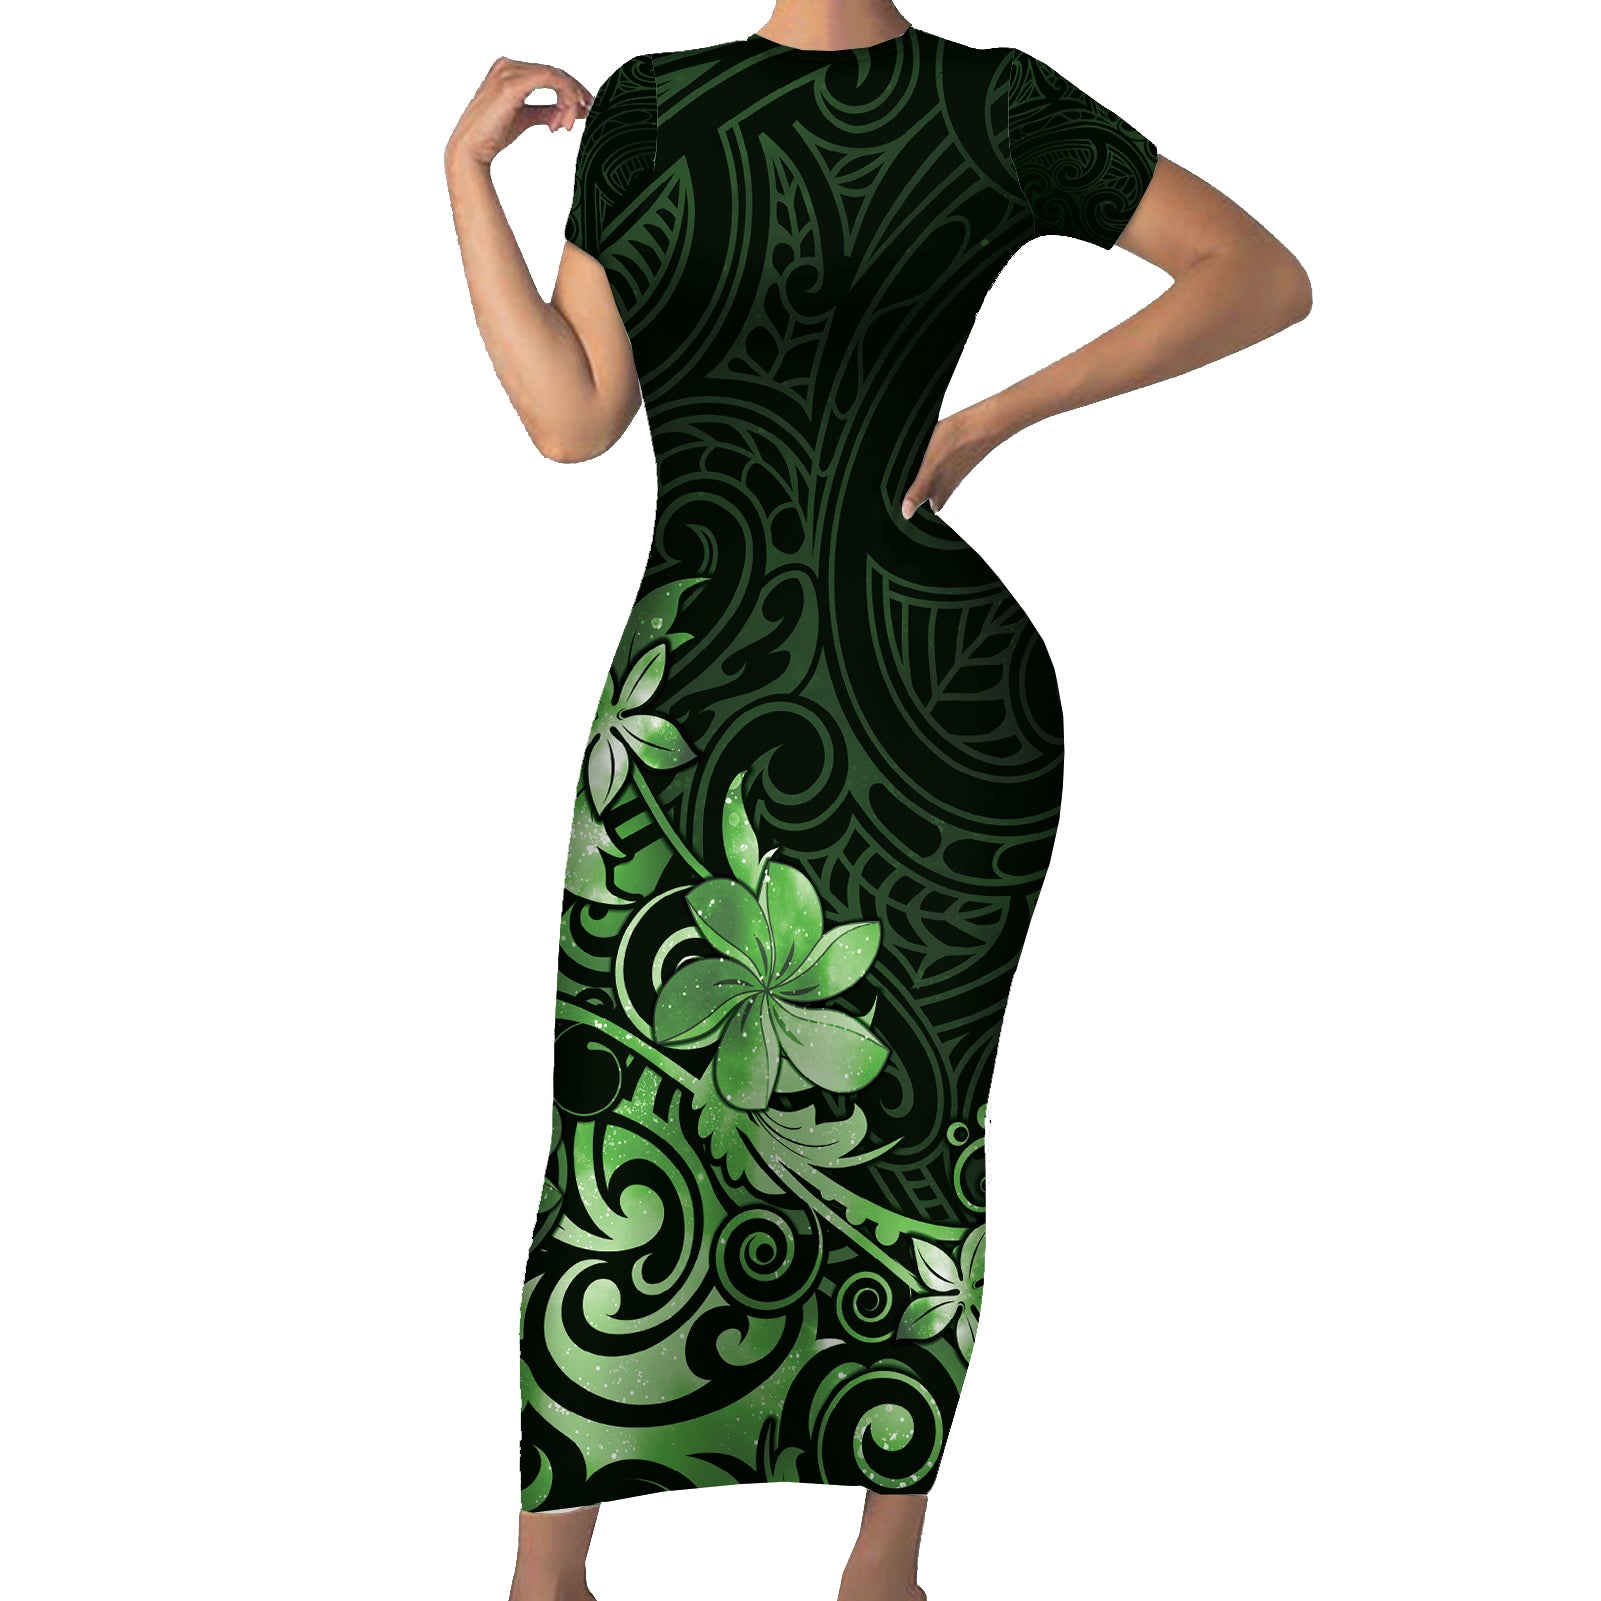 Matariki New Zealand Short Sleeve Bodycon Dress Maori Pattern Green Galaxy